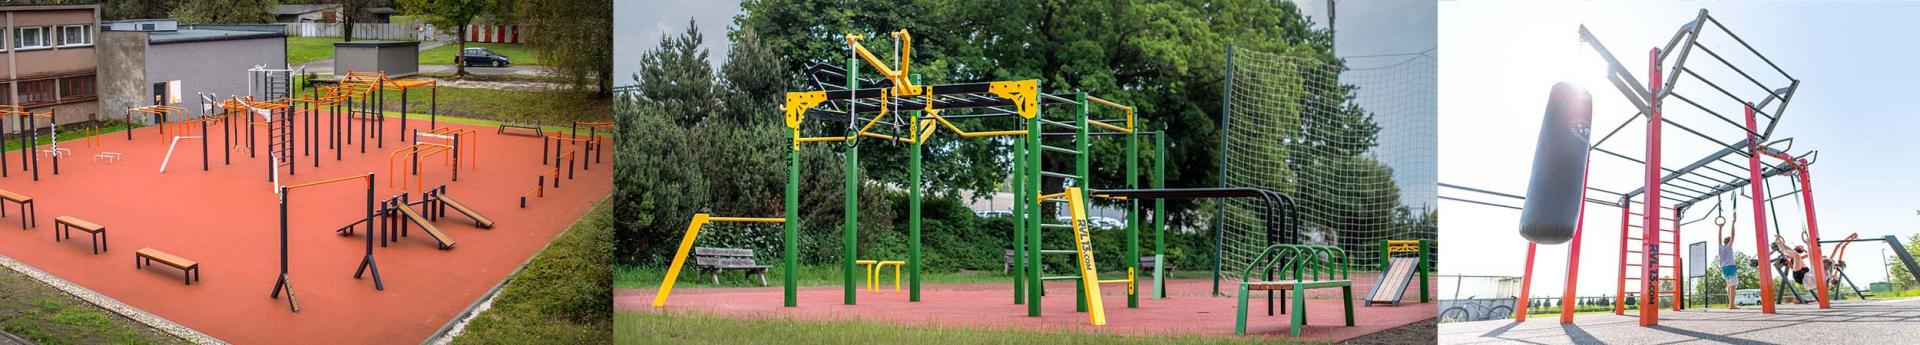 Workout parks